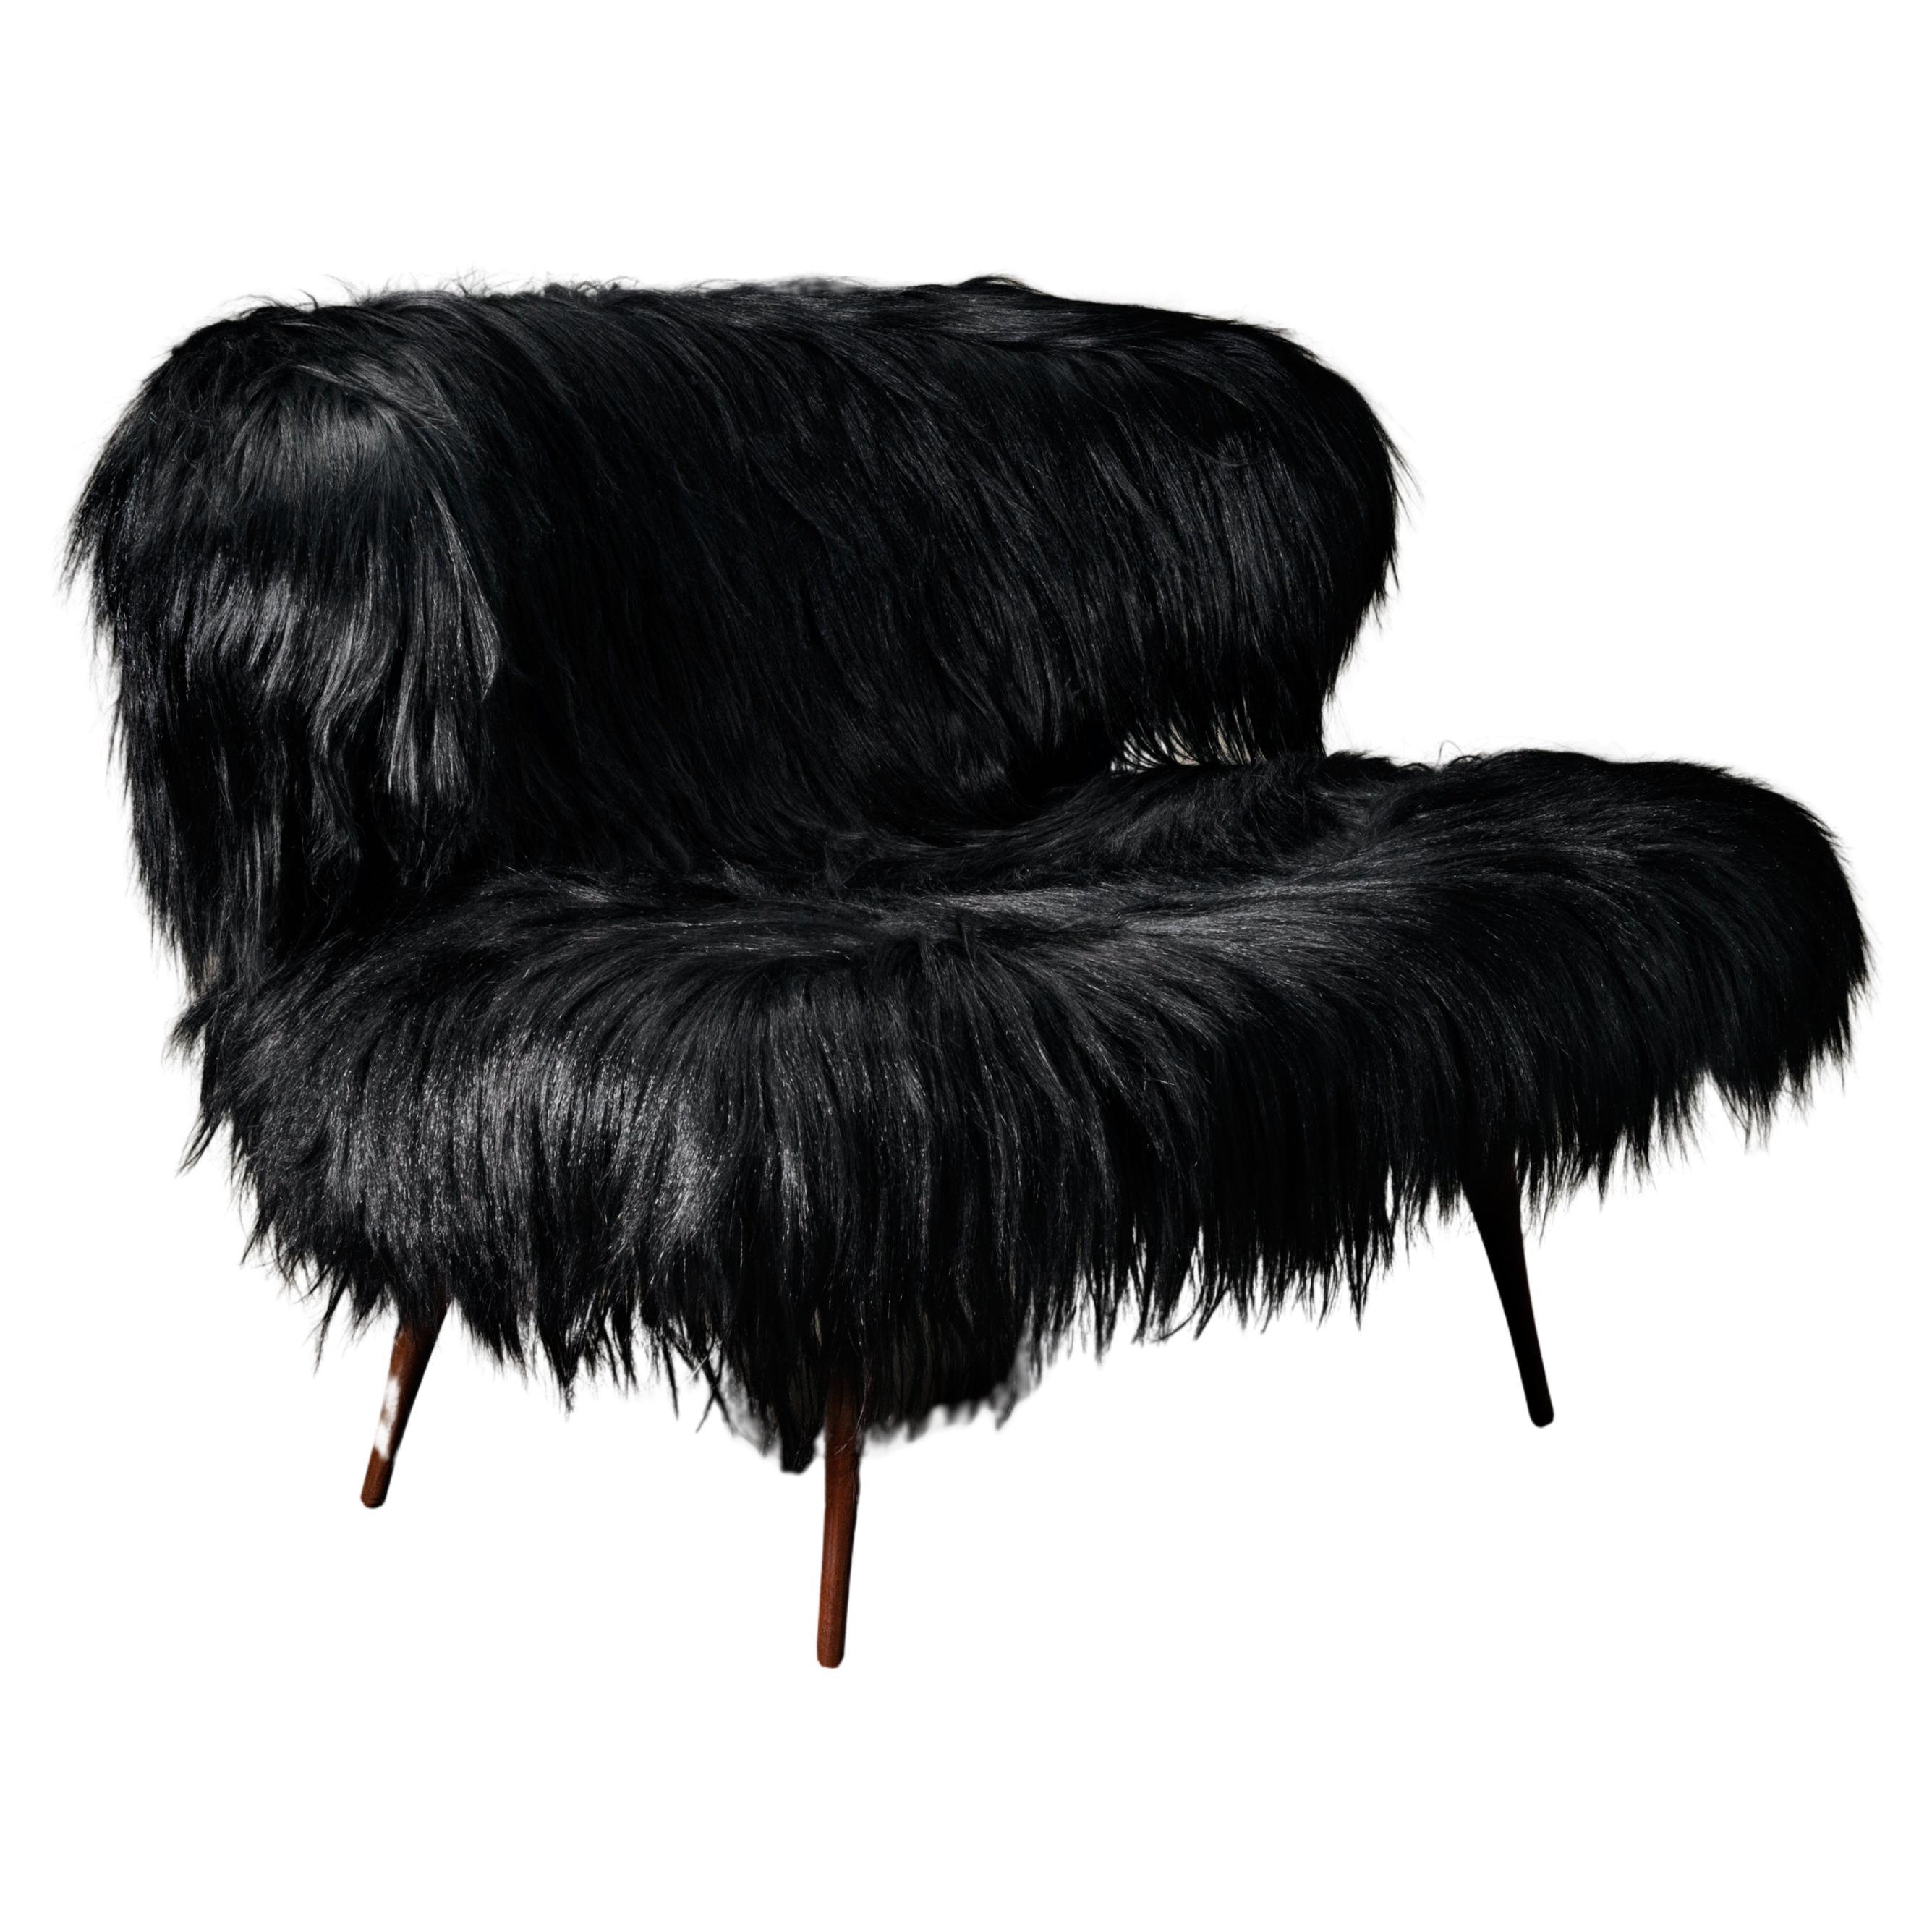 Videre Licet, "Black Woolly Bella", Chair, 2014